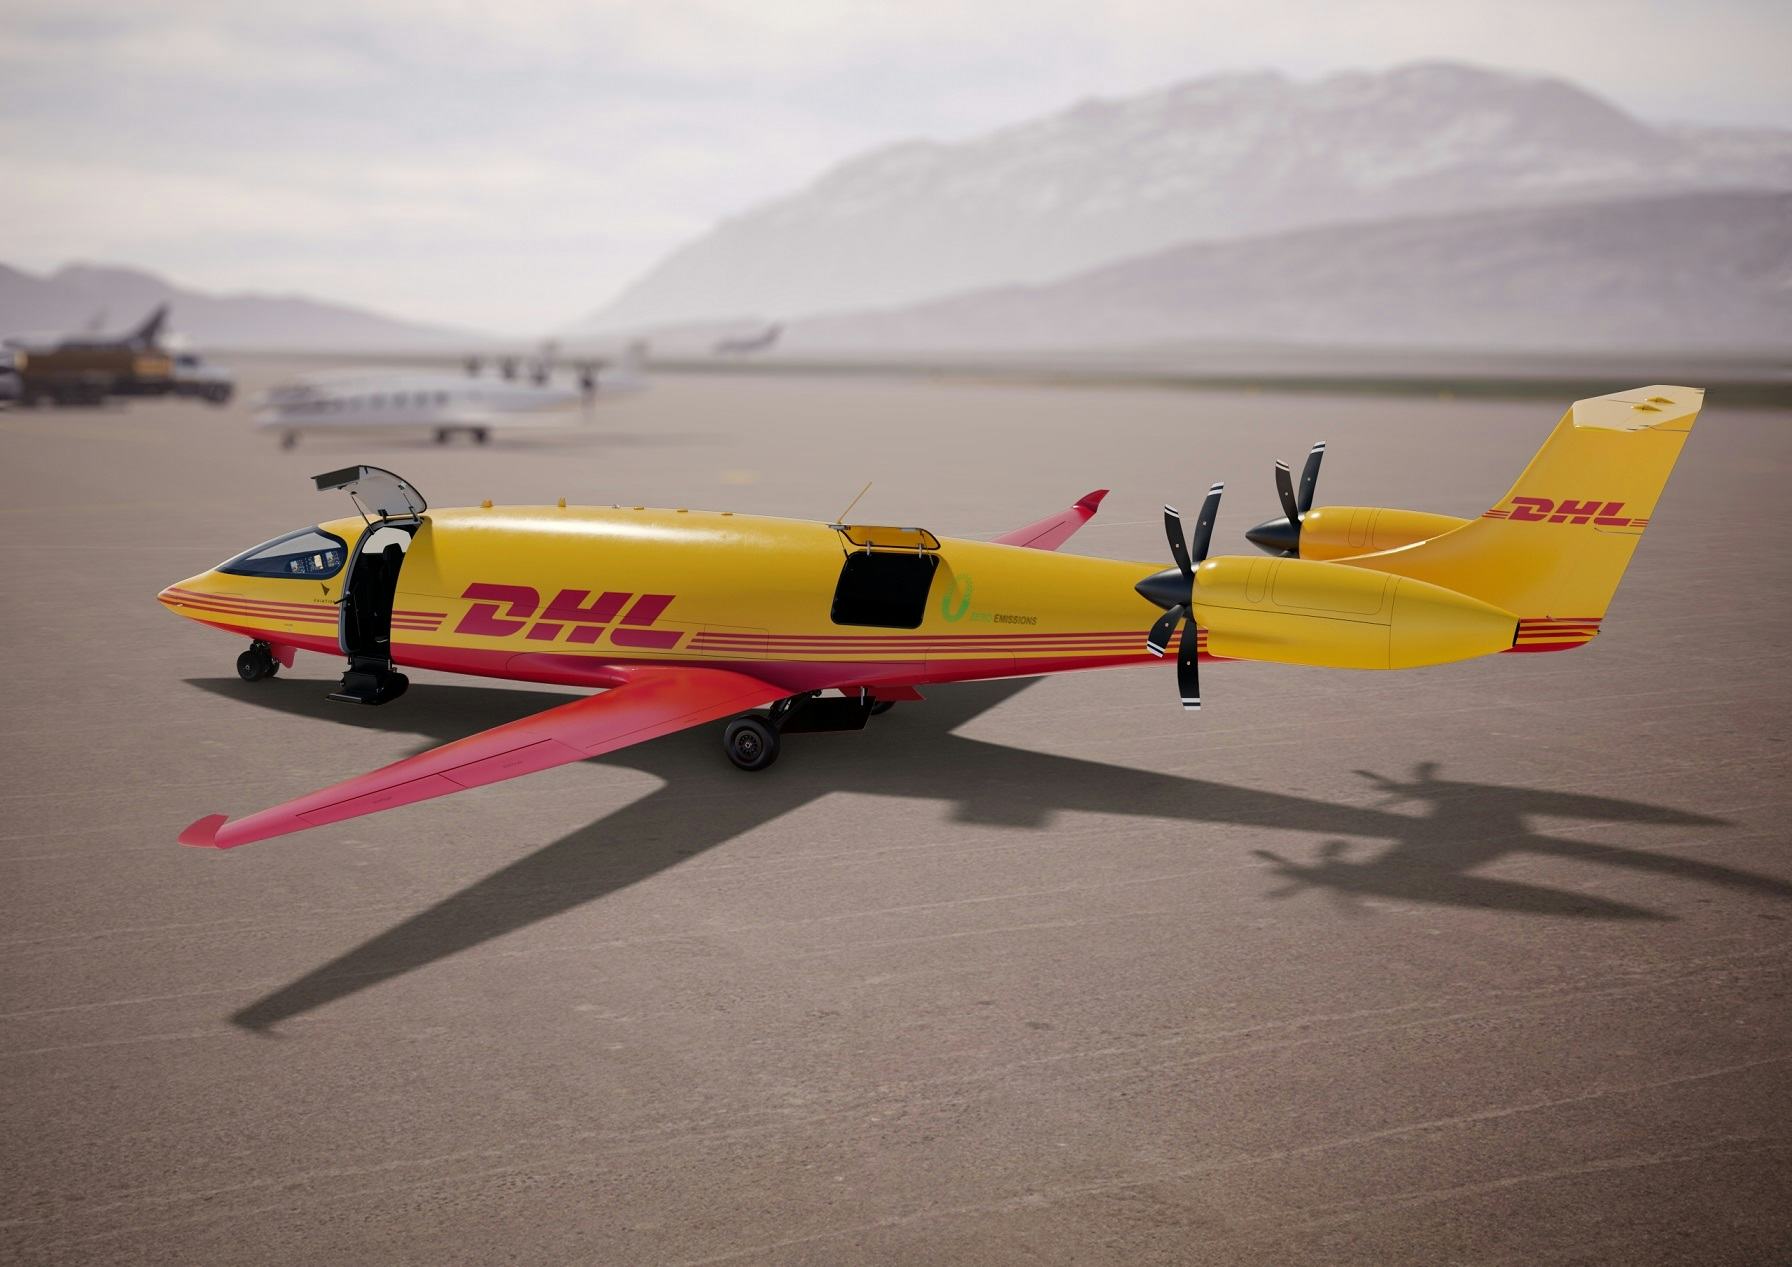 DHL Express bestelt 12 elektrische vliegtuigen voor vrachtvervoer - VIDEO